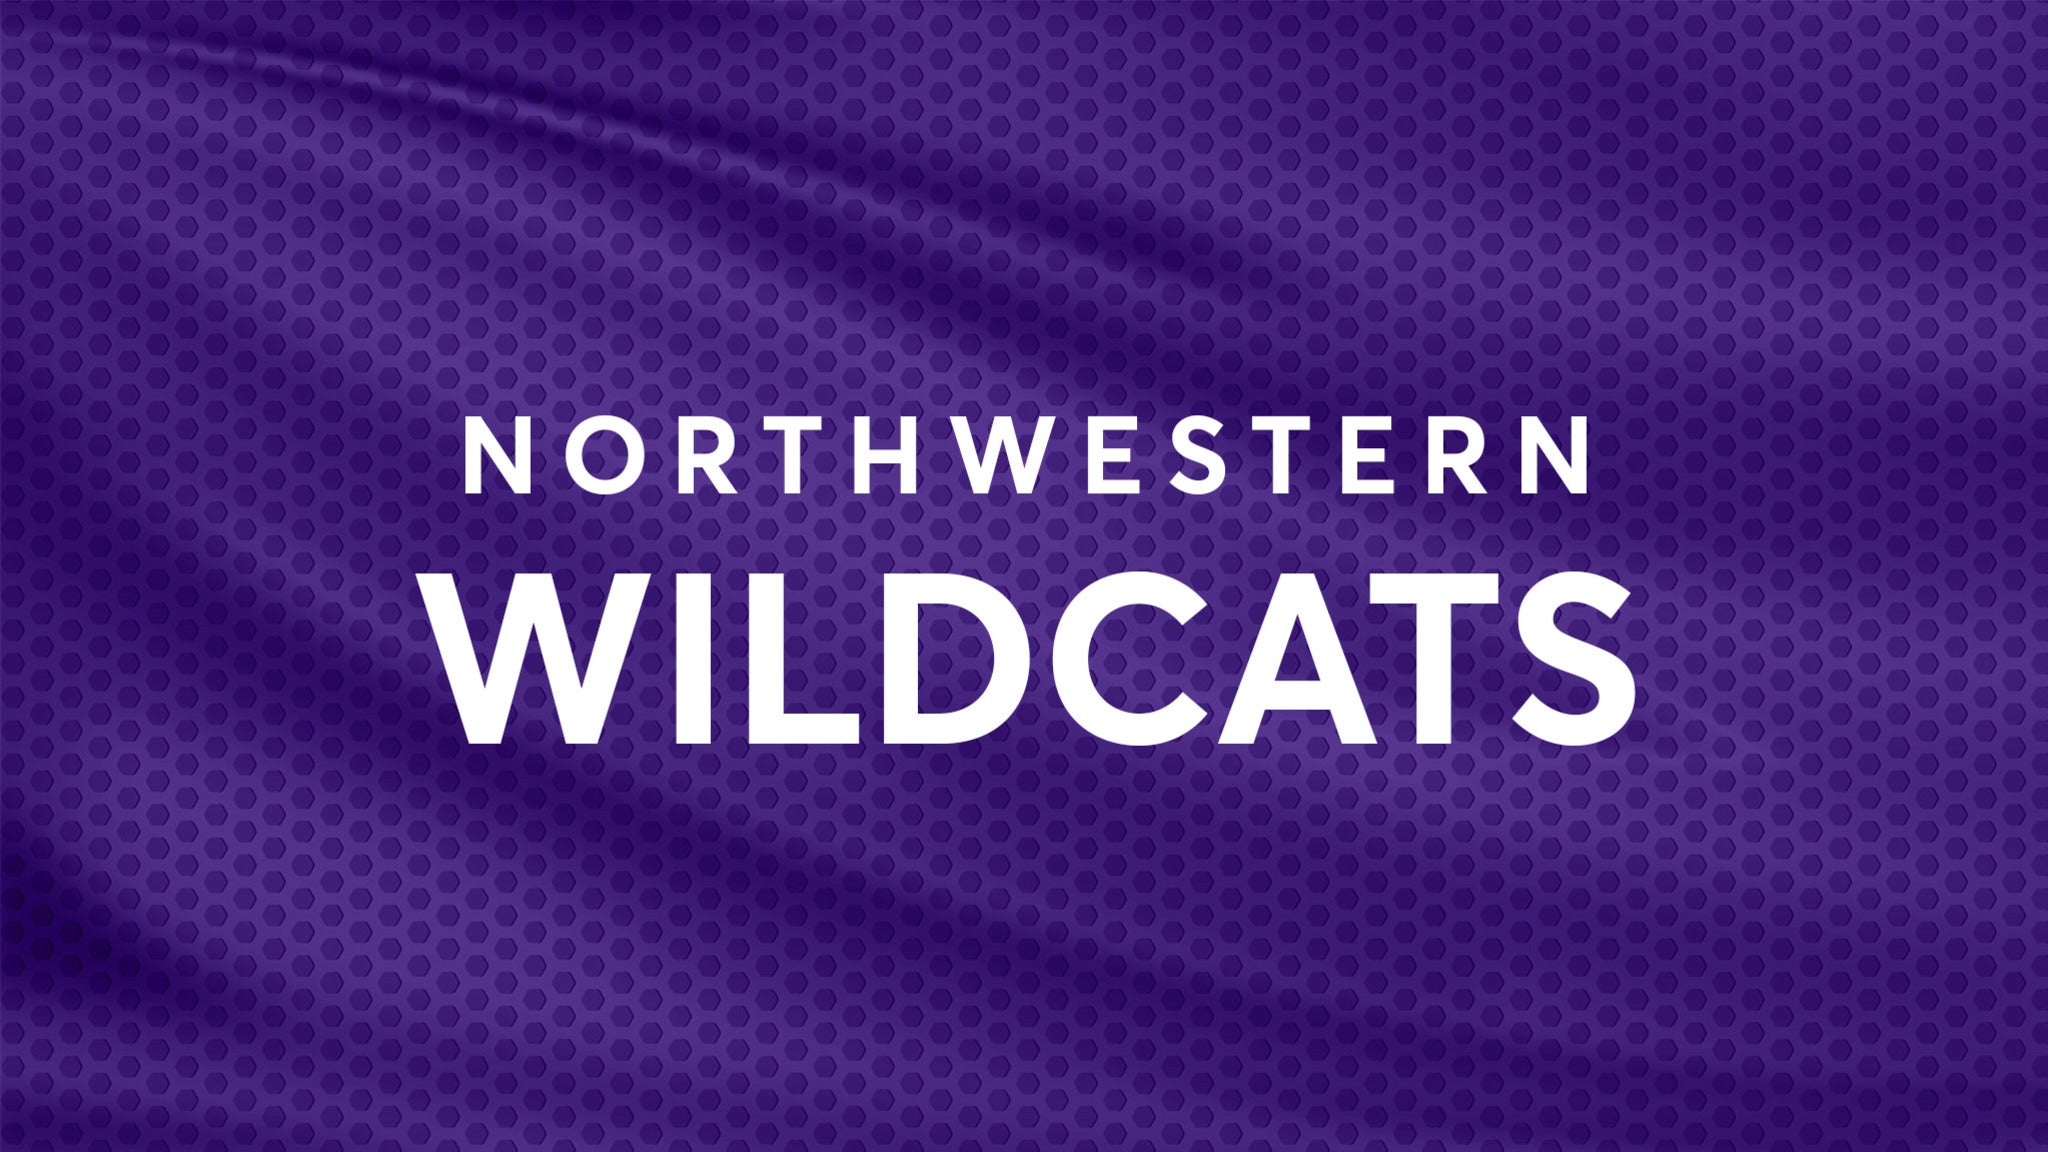 Northwestern Wildcats Football vs. Wisconsin Badgers Football